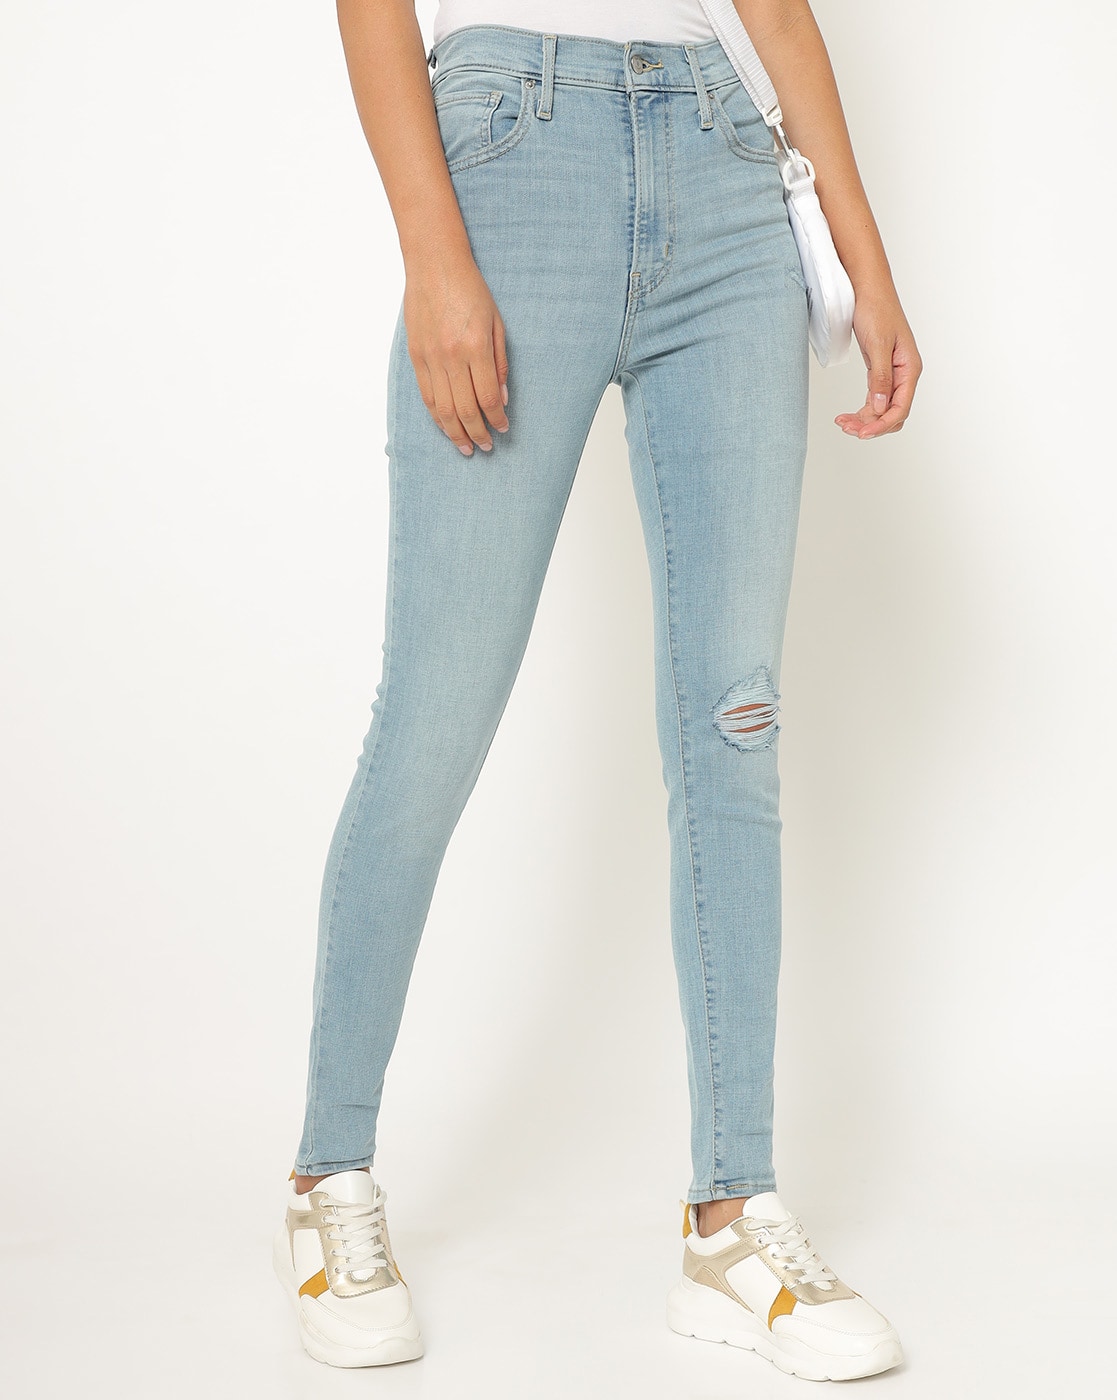 Details about   Levis Super Skinny Jeans Womens Blue Active Low Rise Soft Stretch Denim Jeggings 